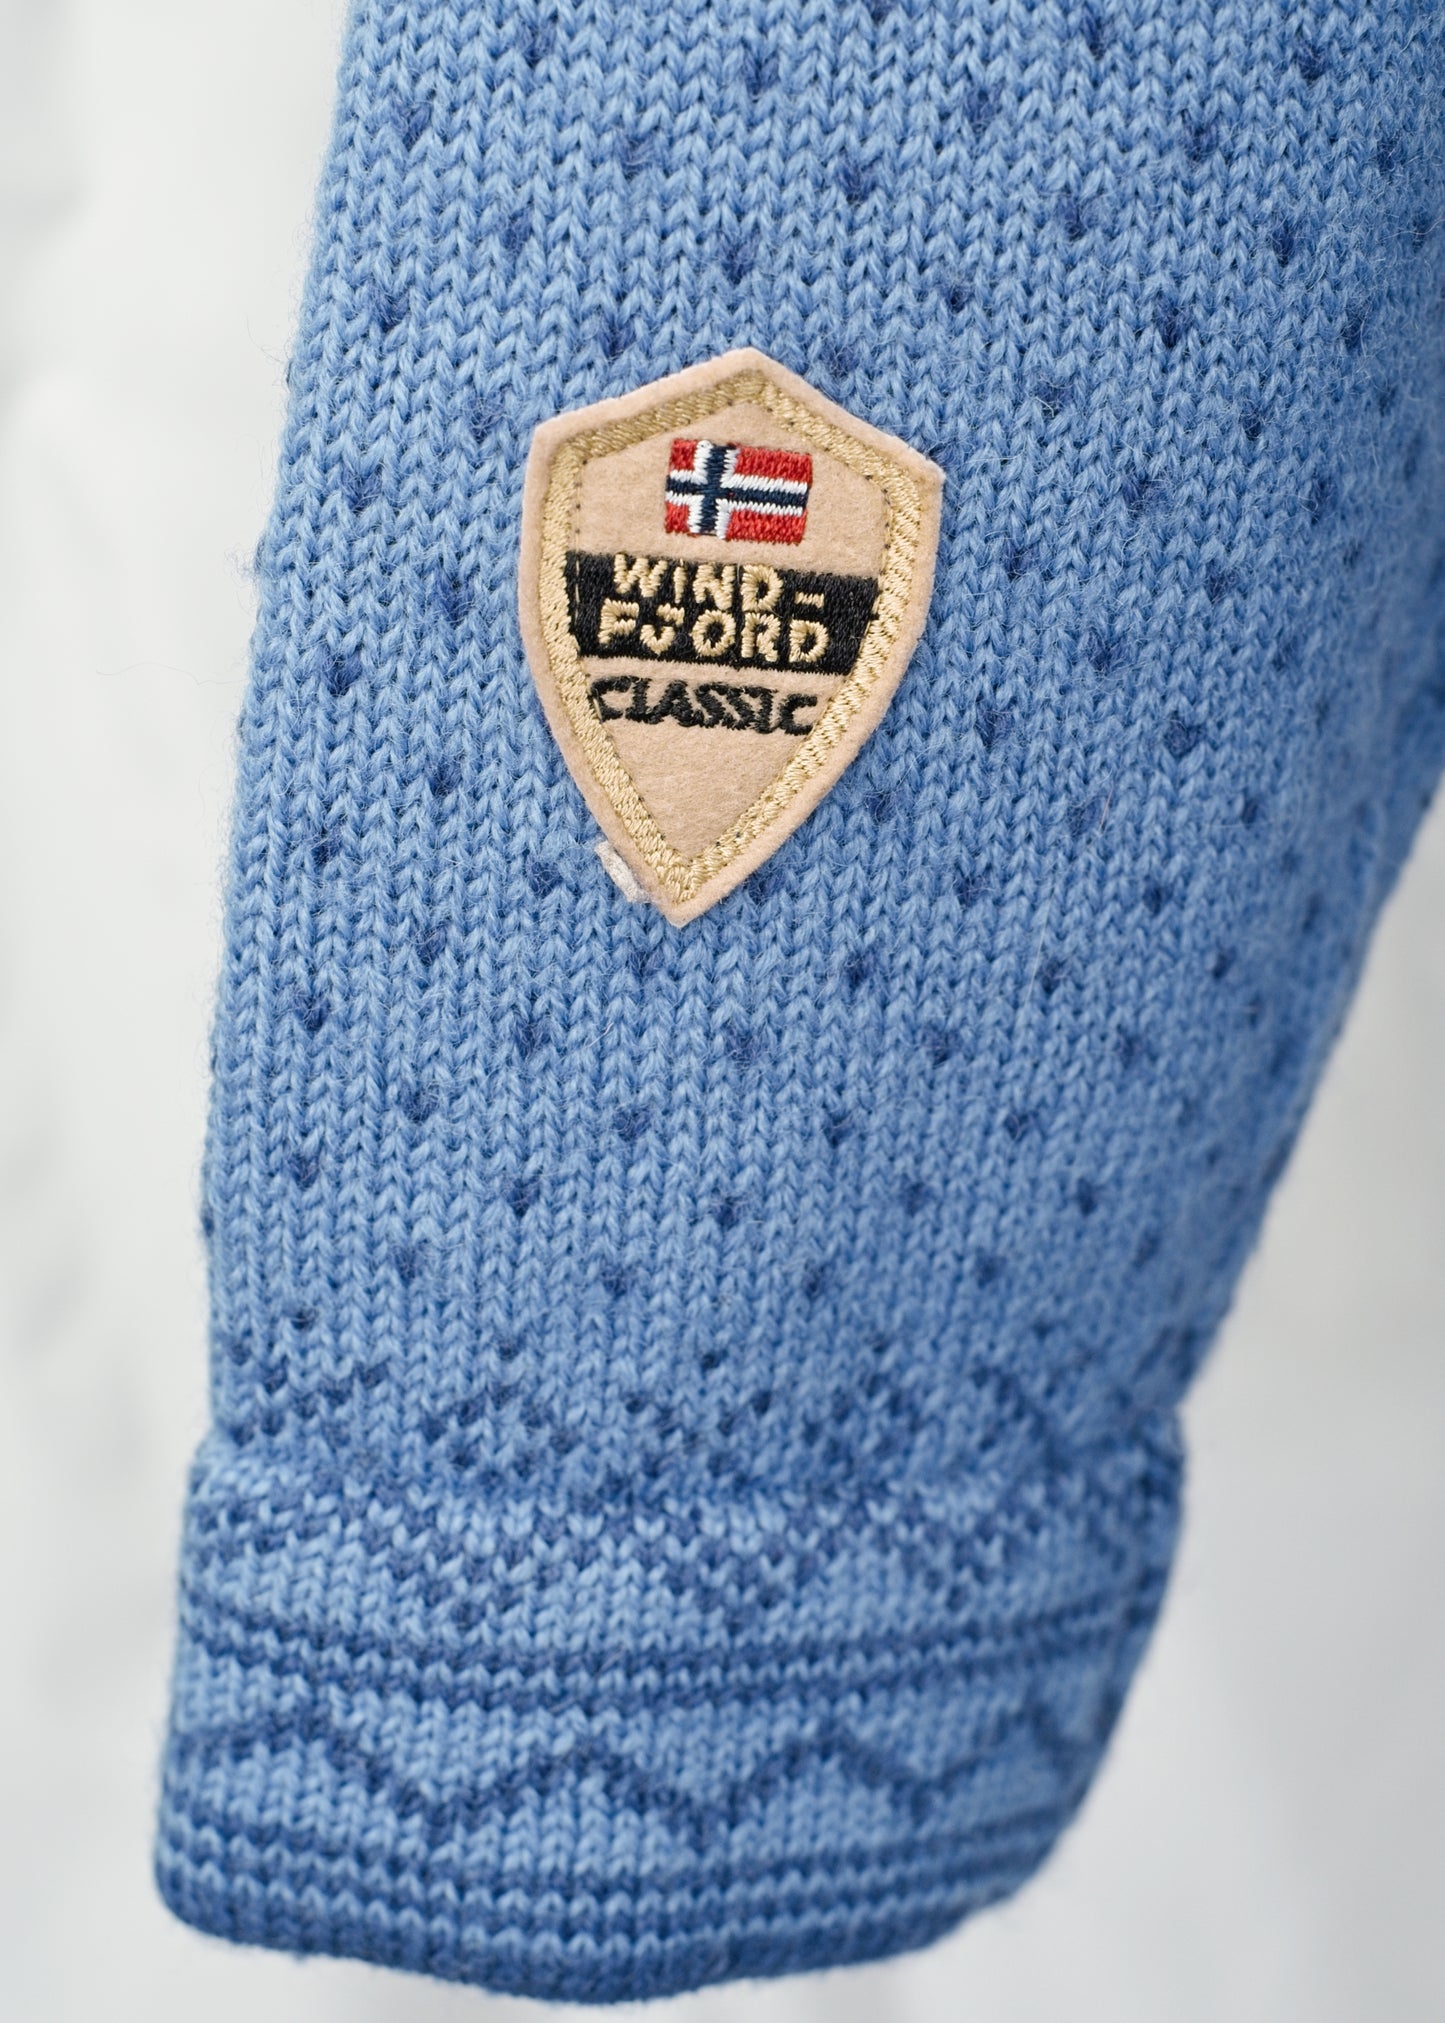 Mens' Blue Norse Chunky Winter Knit Zipped Sweater Jacket • Windfjord • XXL